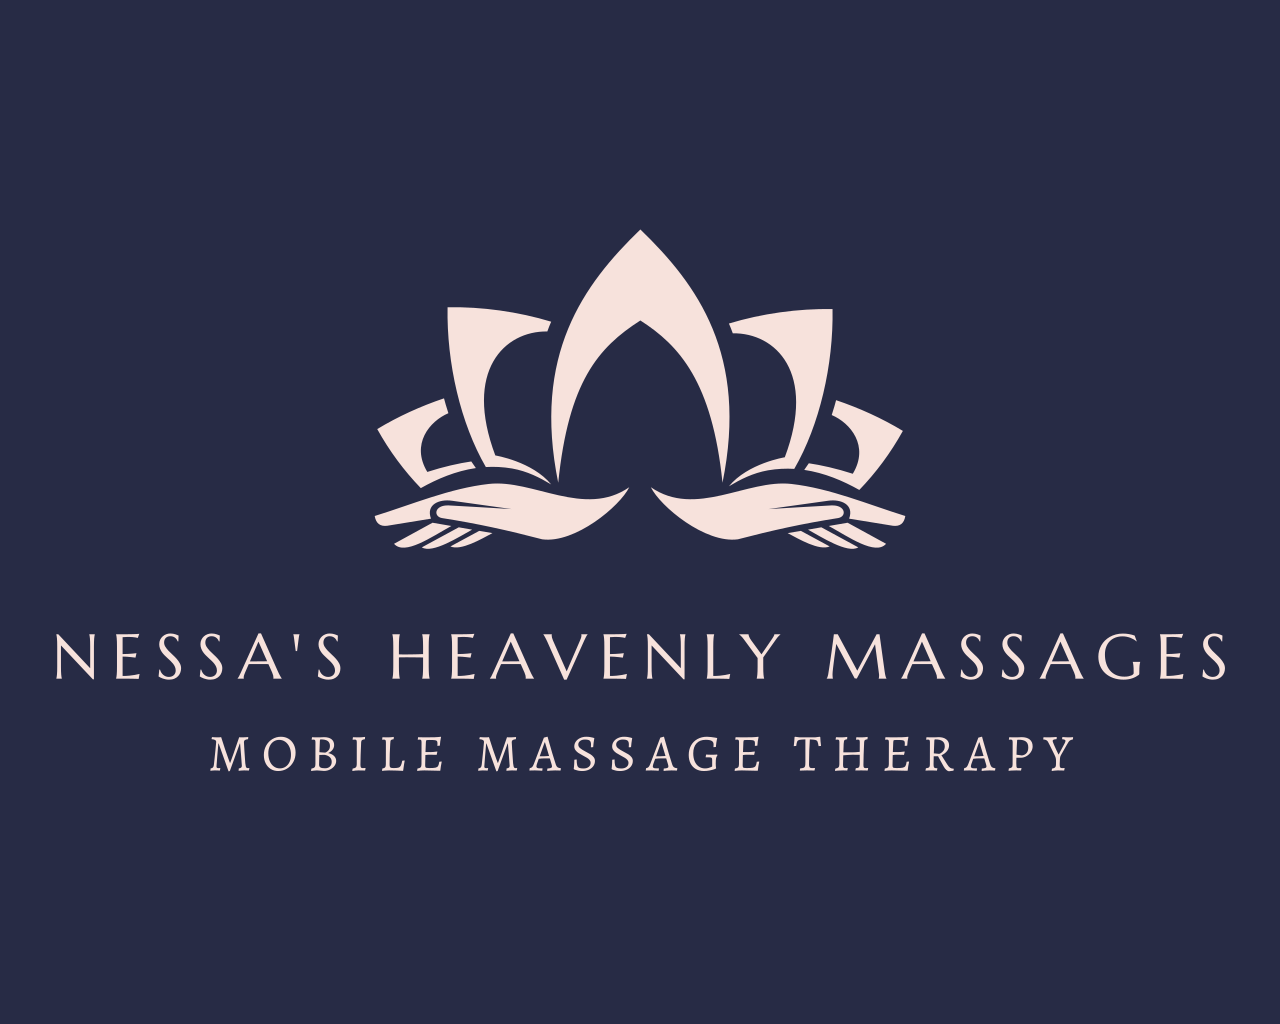 NESSA'S HEAVENLY MASSAGES's web page